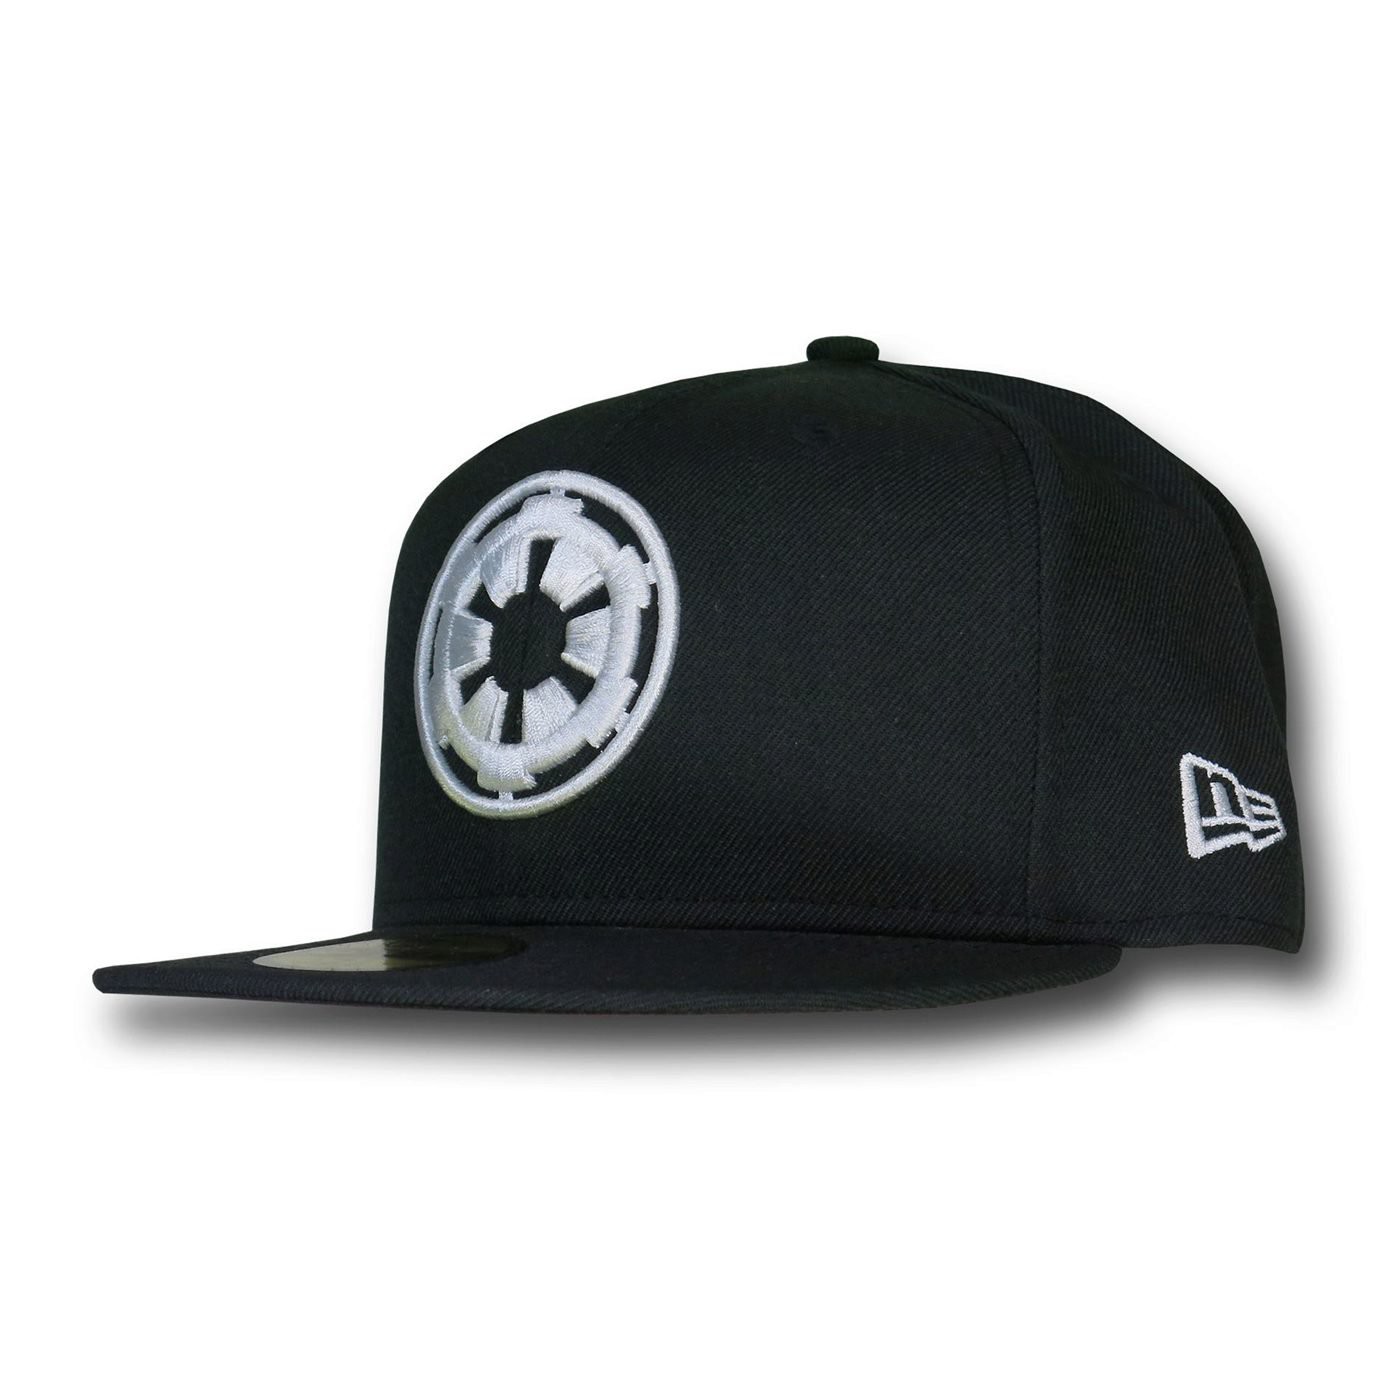 Star Wars Green Imperial Cog Snapback Flat Bill Baseball Cap/Hat from Bioworld 